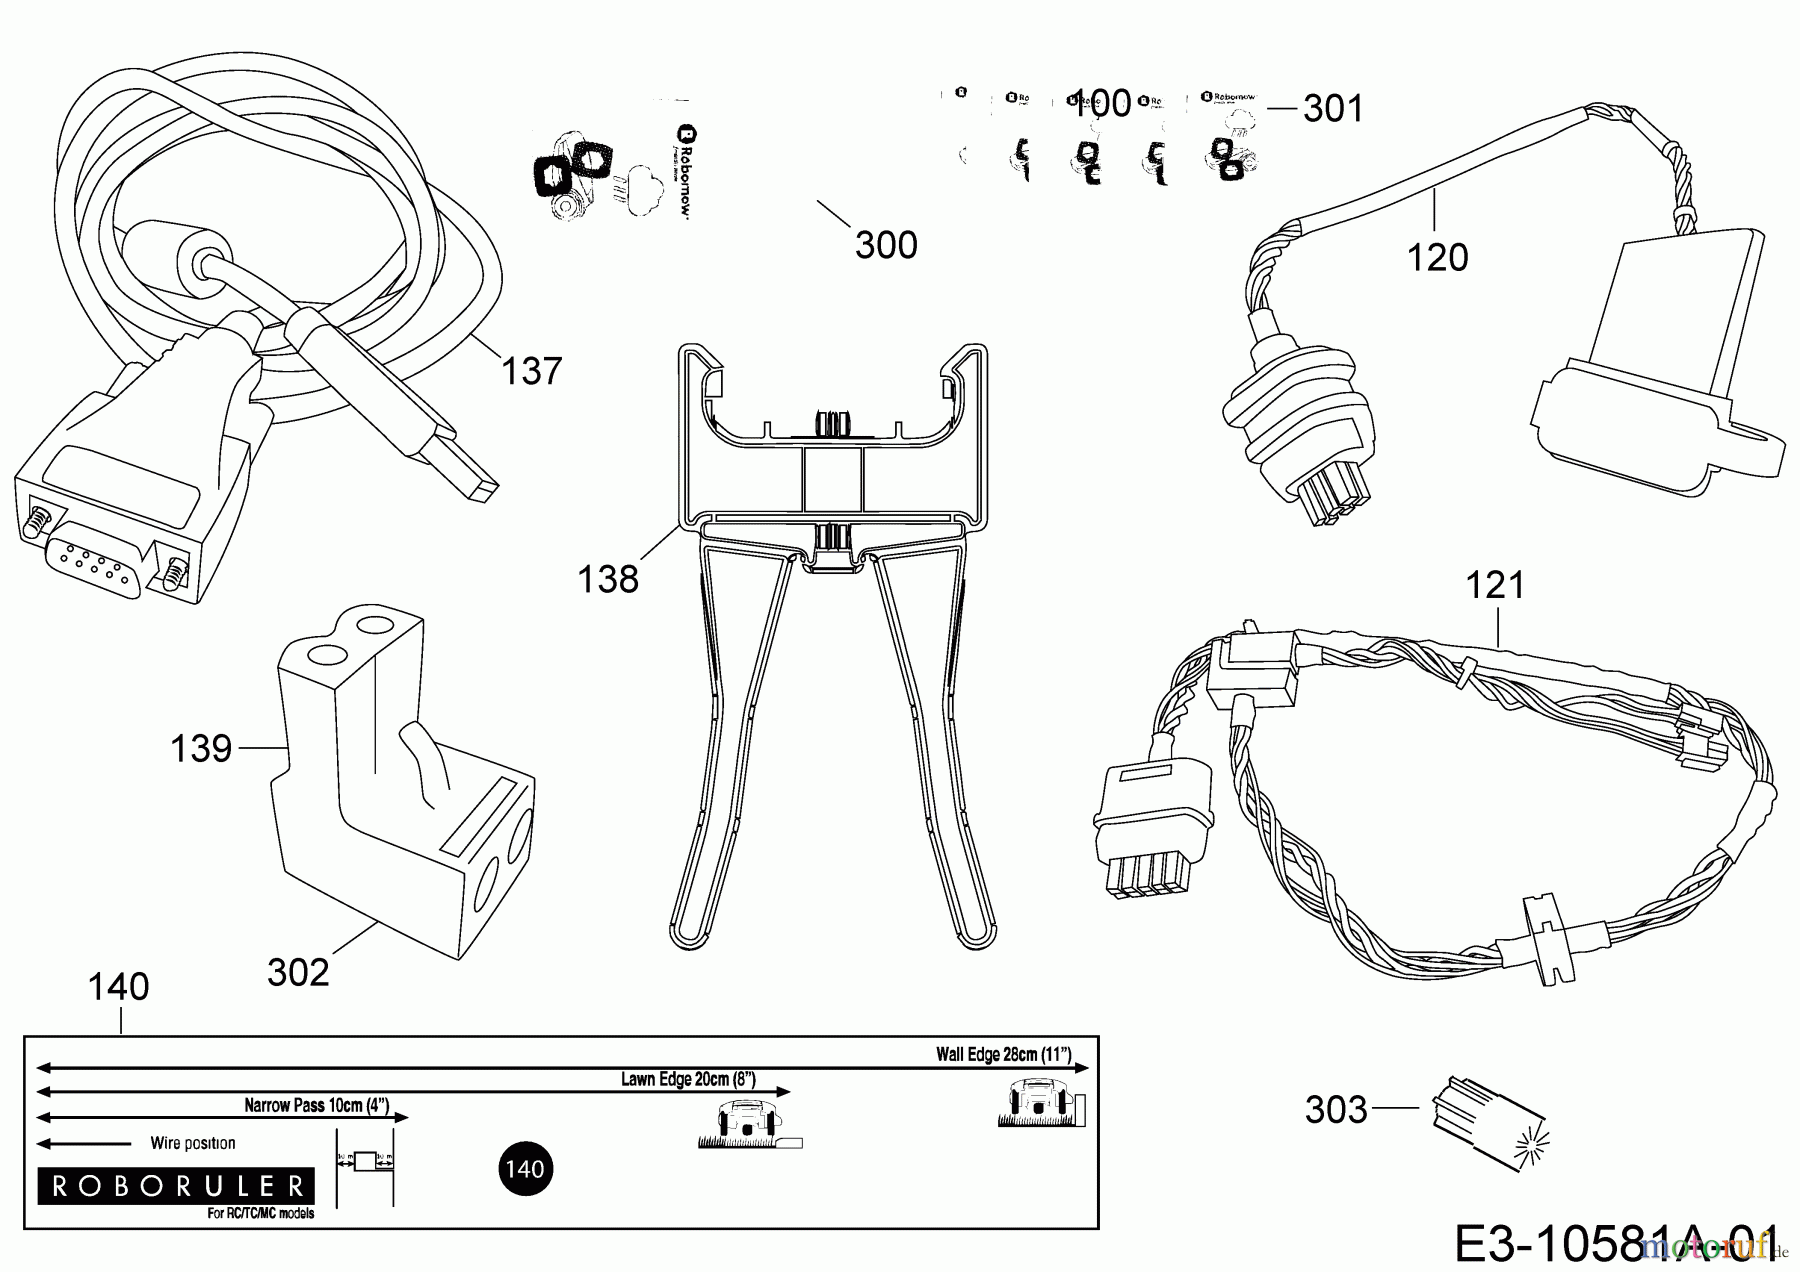  Robomow Mähroboter RC302 (White) PRD7002AW  (2014) Kabel, Kabelanschluß, Regensensor, Werkzeug